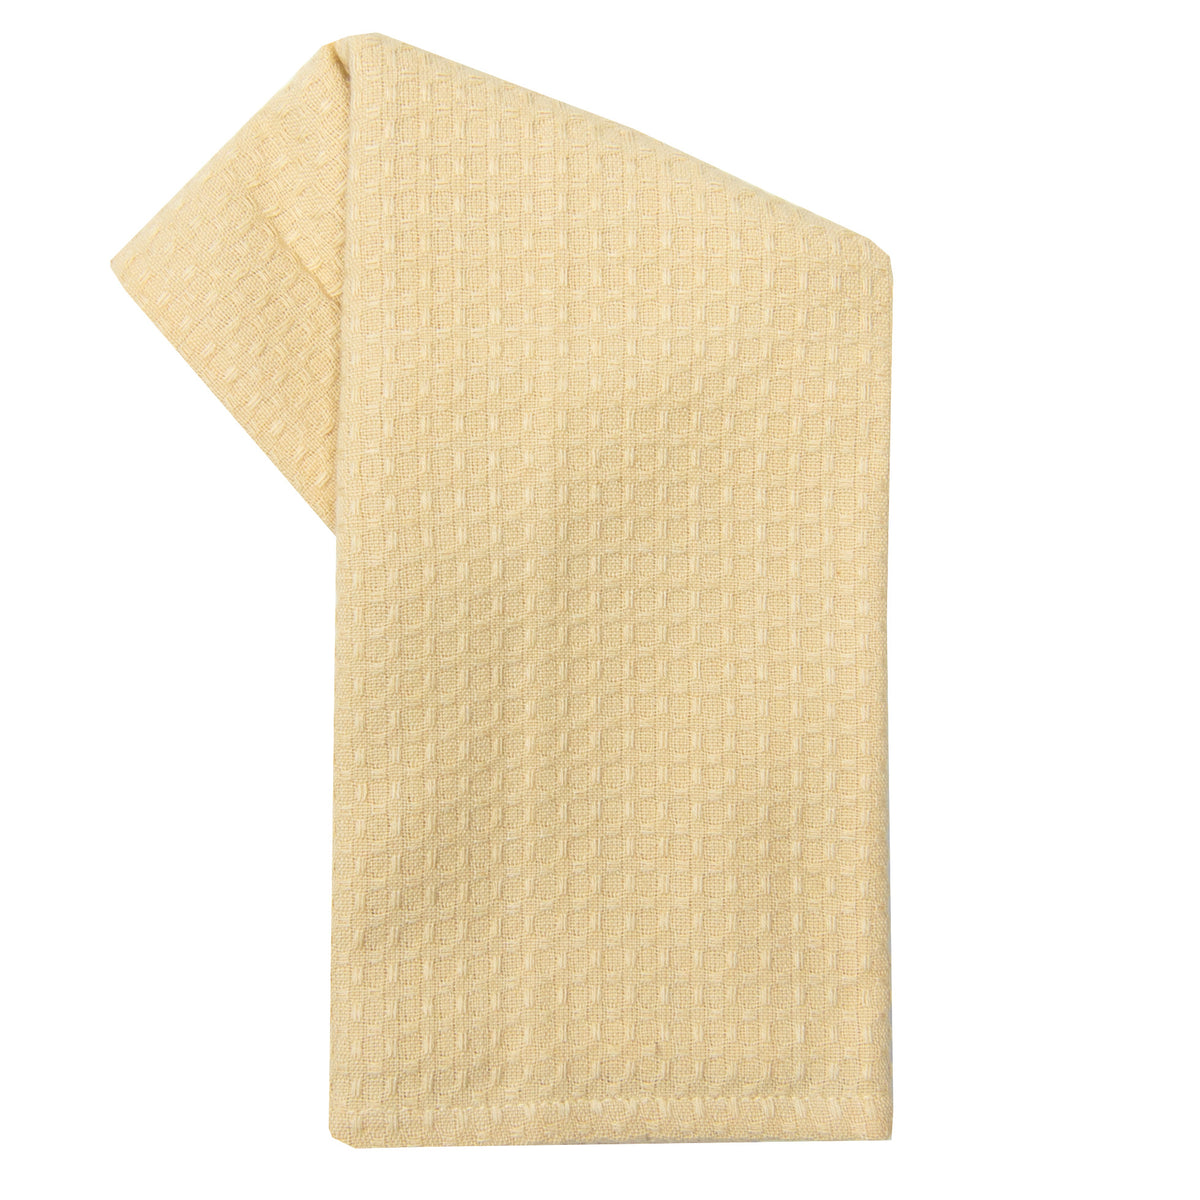 Dunroven House Waffle Weave Tea Towel 20x28 Gray